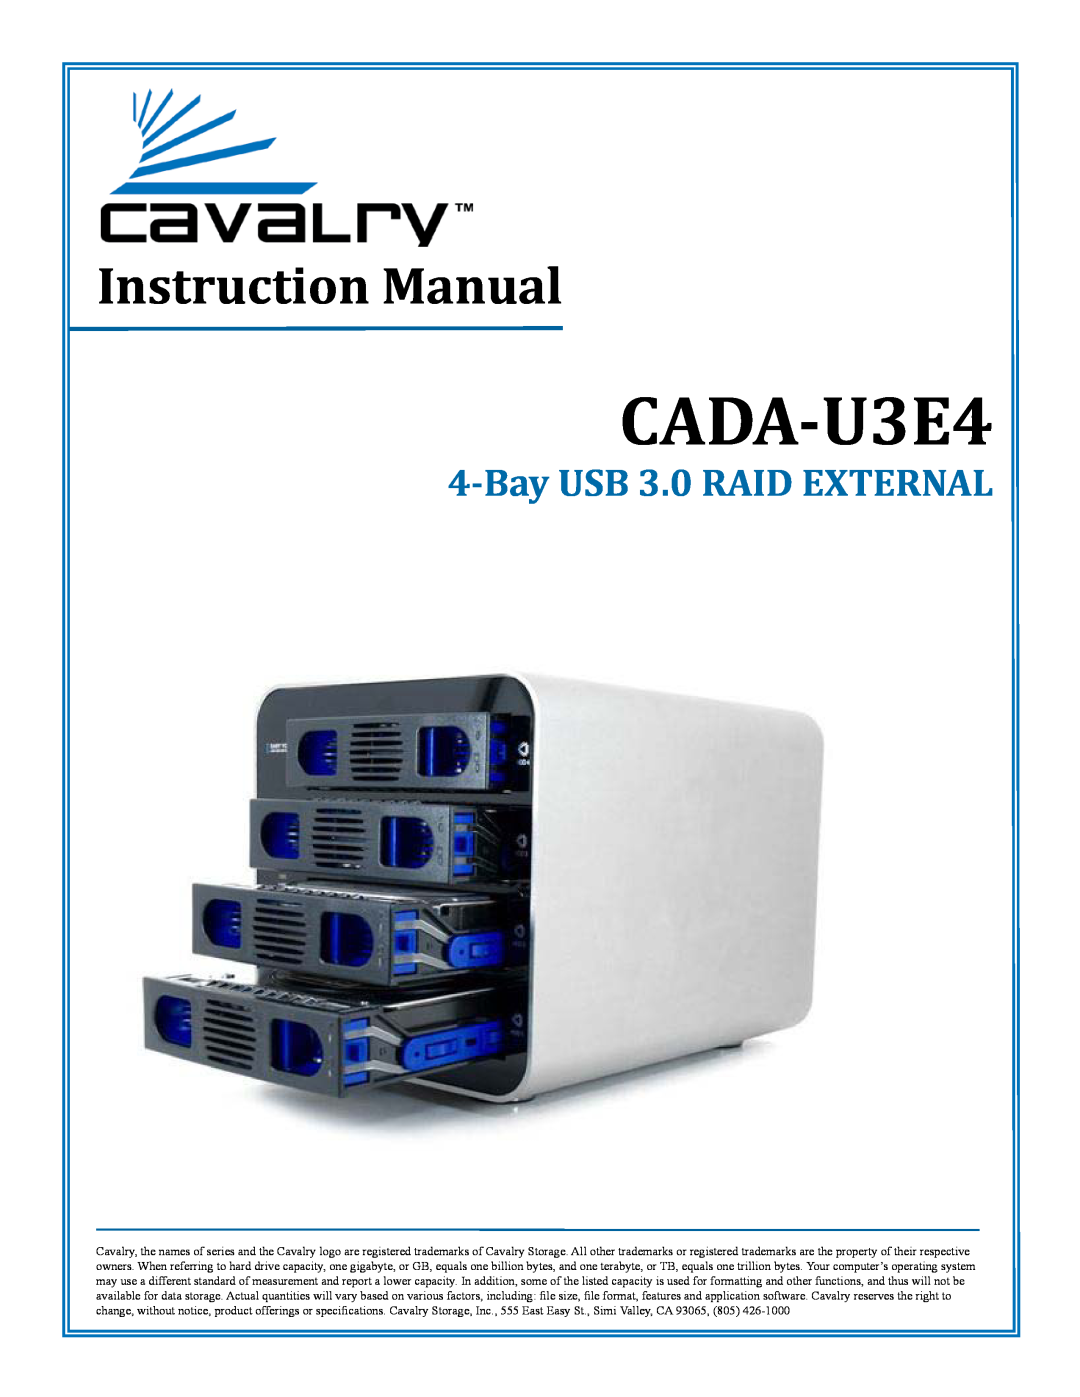 Cavalry Storage CADA-U3E4 instruction manual Instruction Manual, Bay USB 3.0 RAID EXTERNAL 